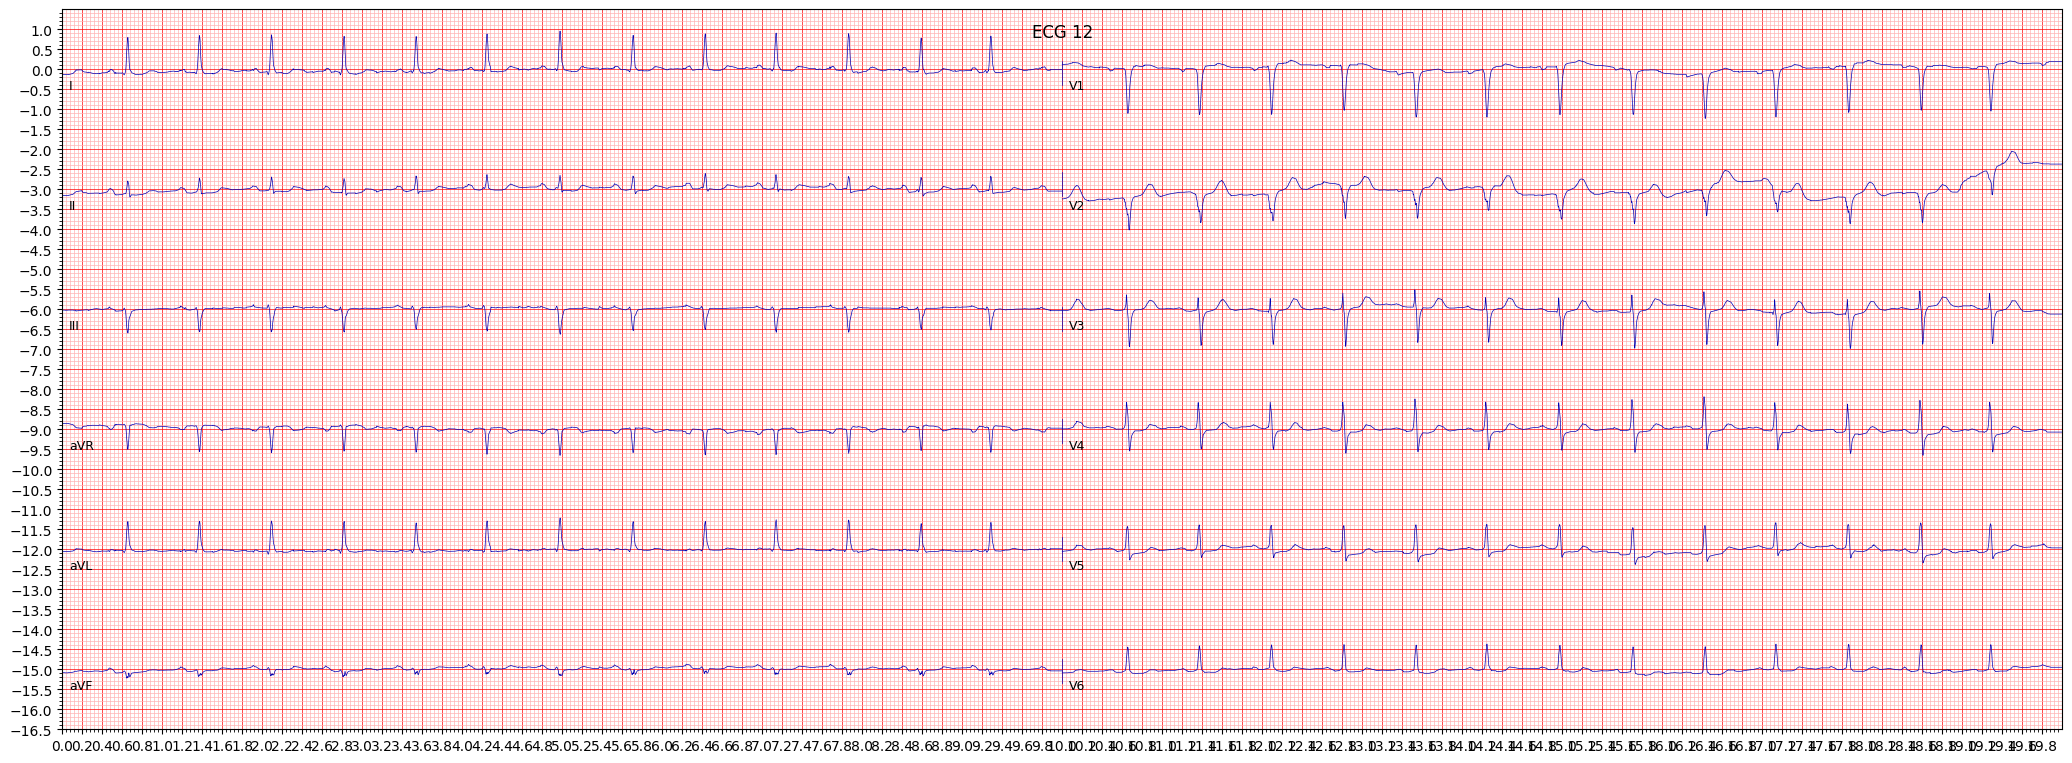 anterior myocardial infarction (AMI) example 10714